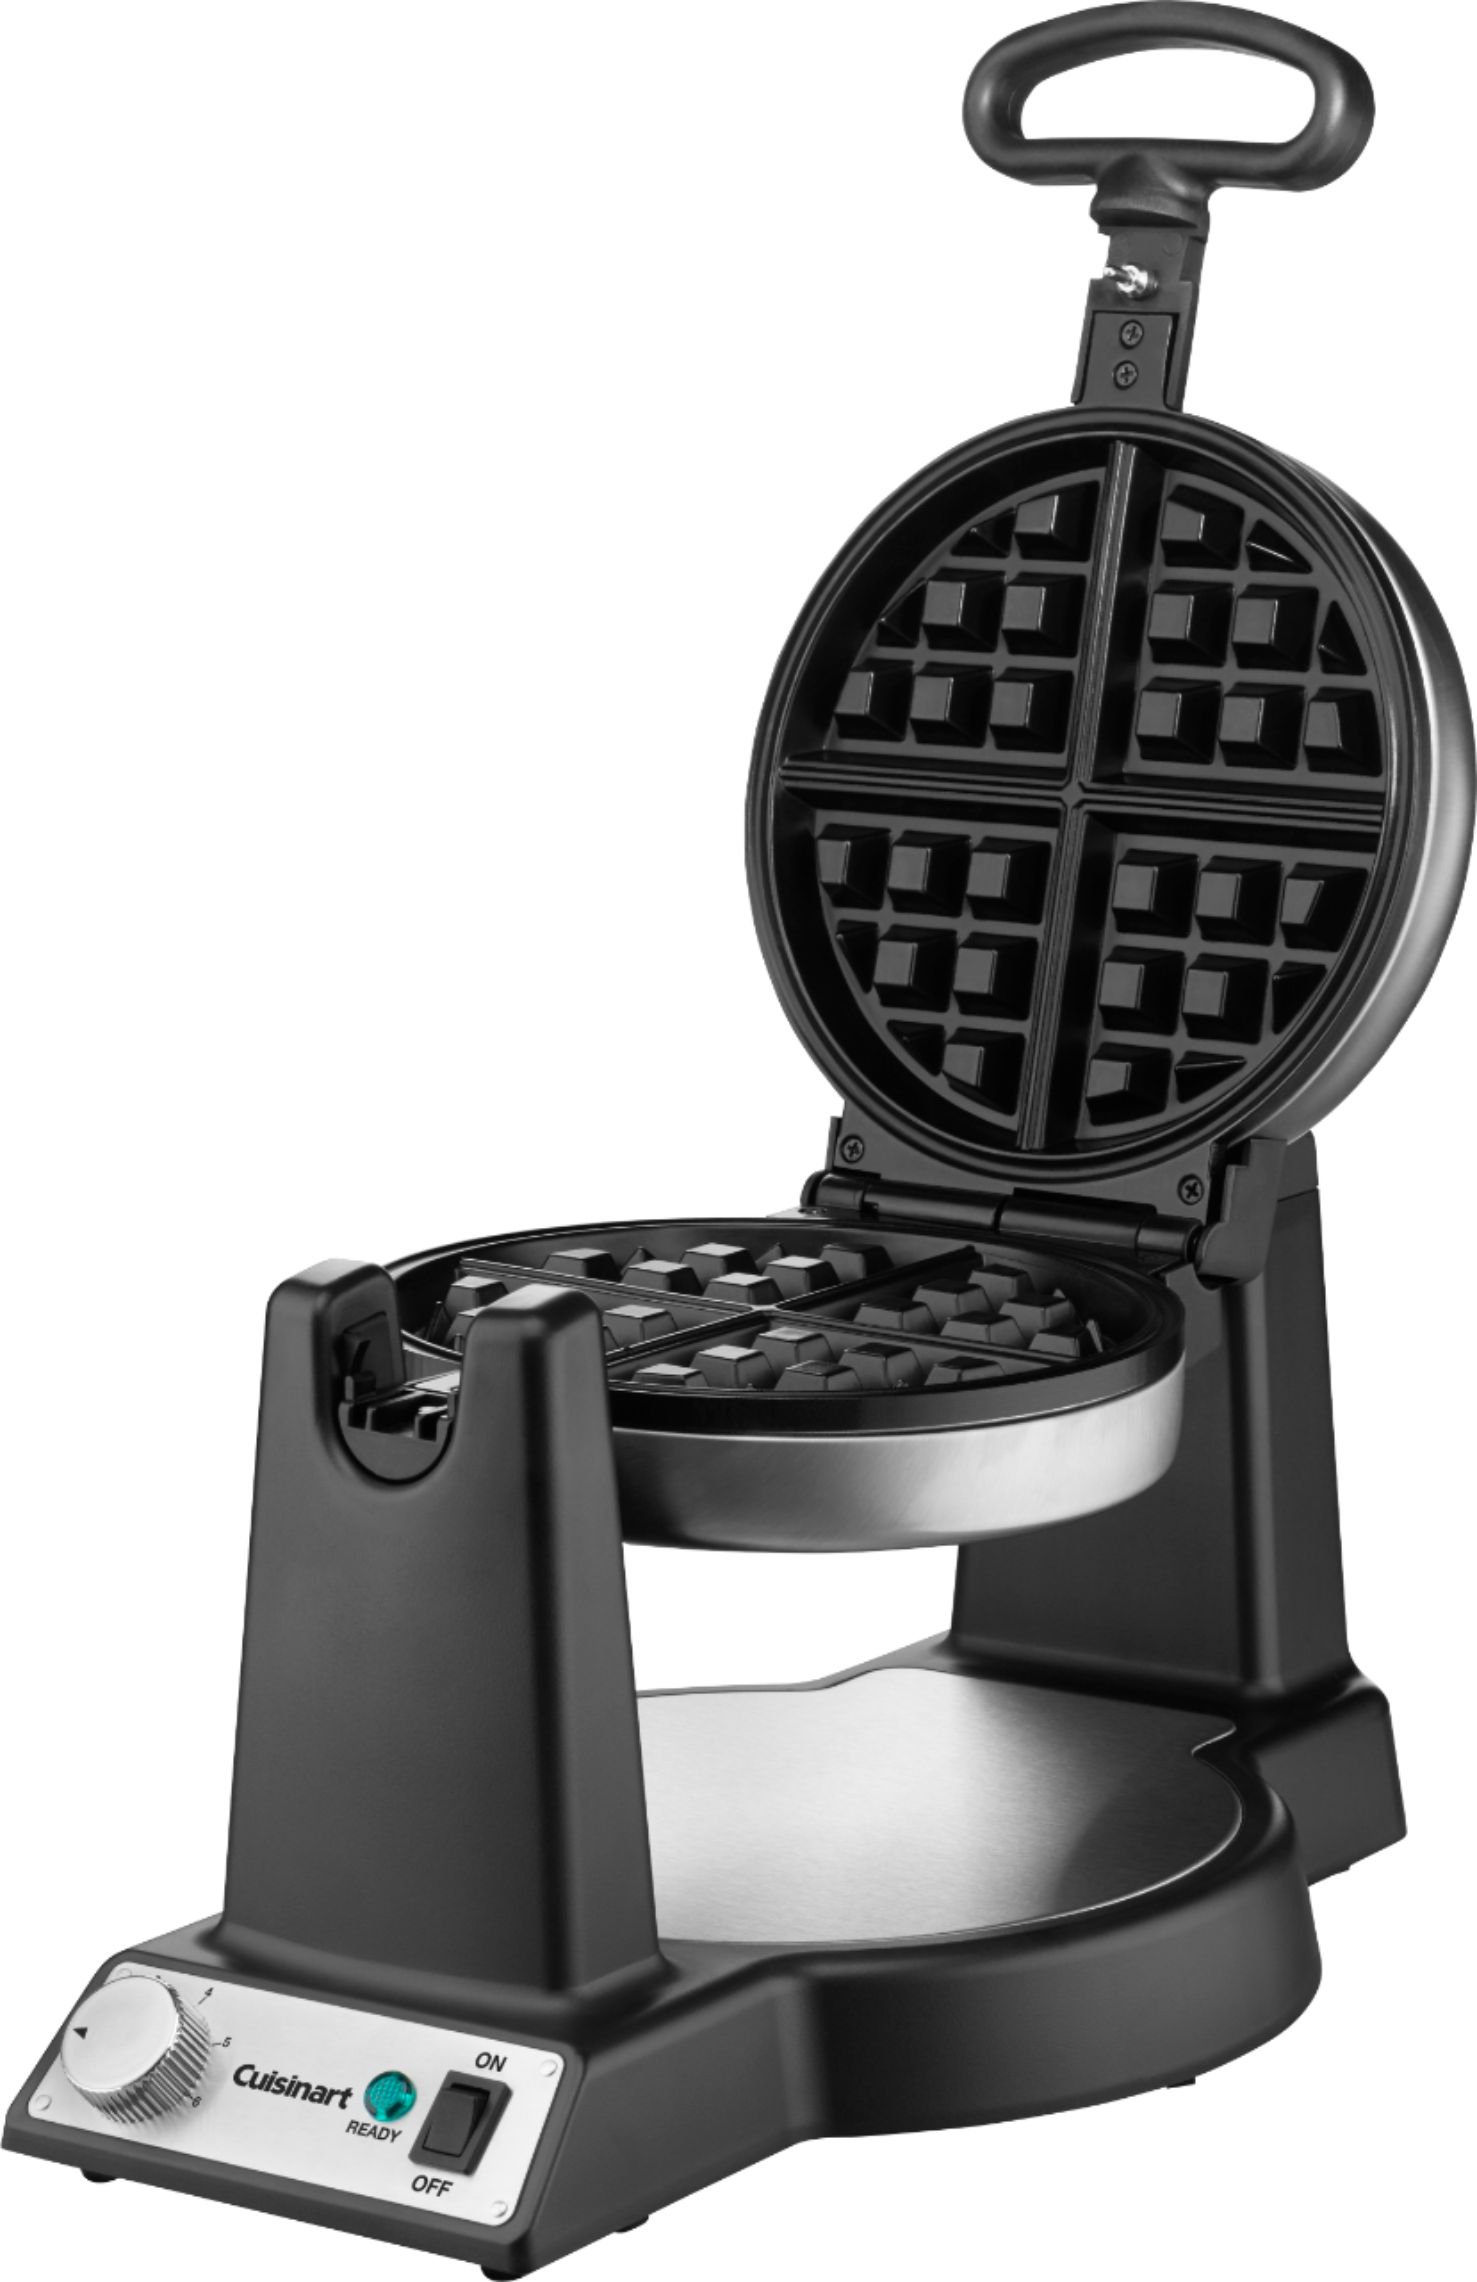 Best Buy: Dual Waffle Maker NS-WM2CBL7